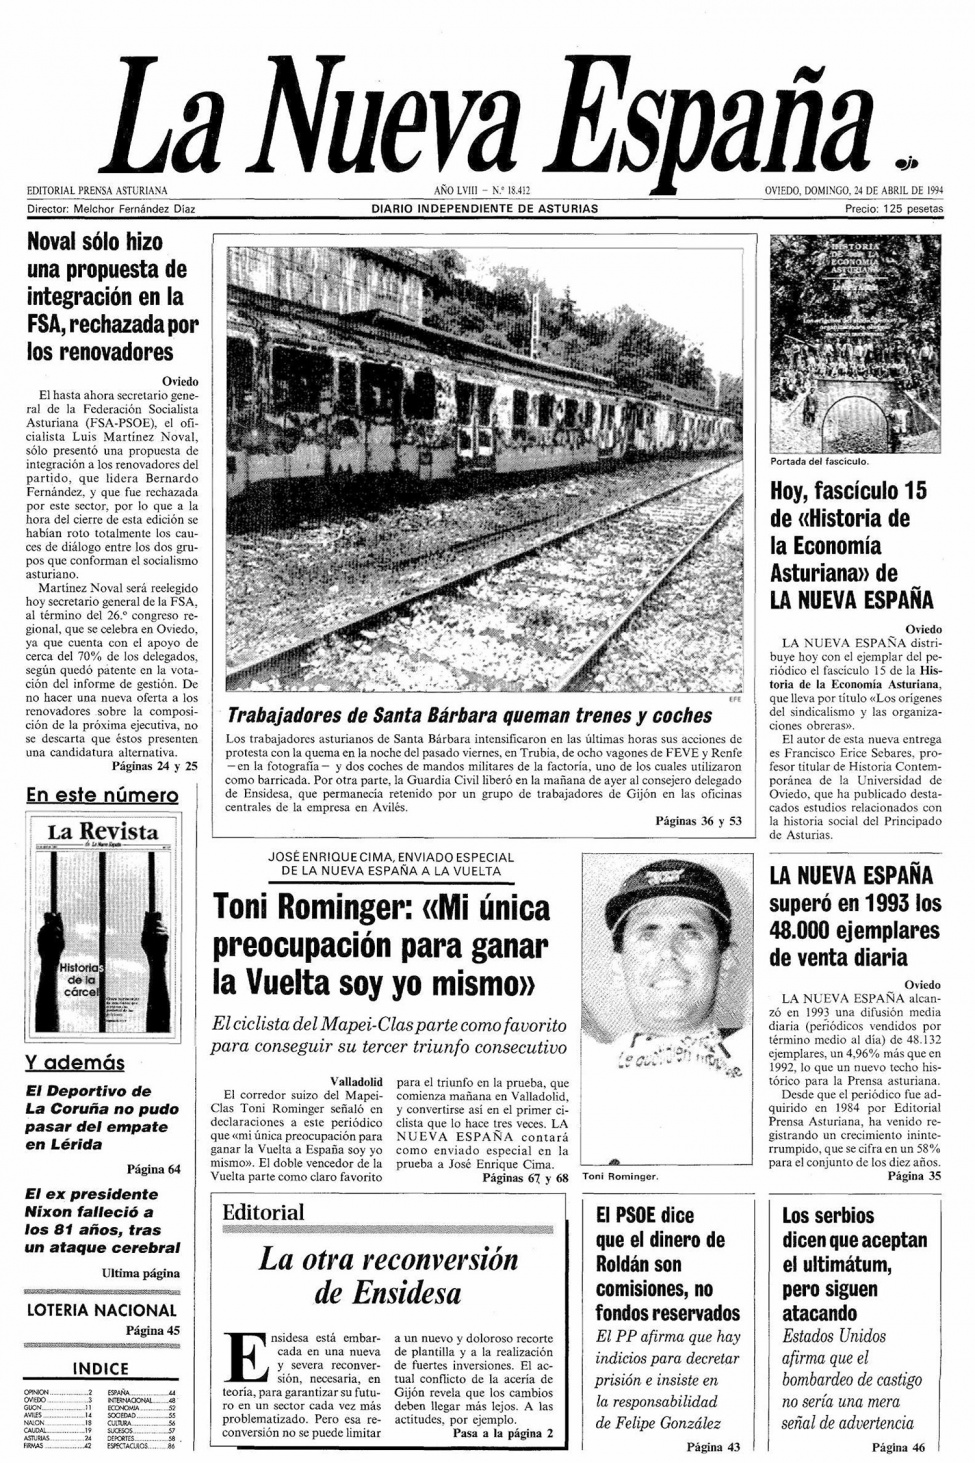 Portada del Domingo, 24 de Abril de 1994